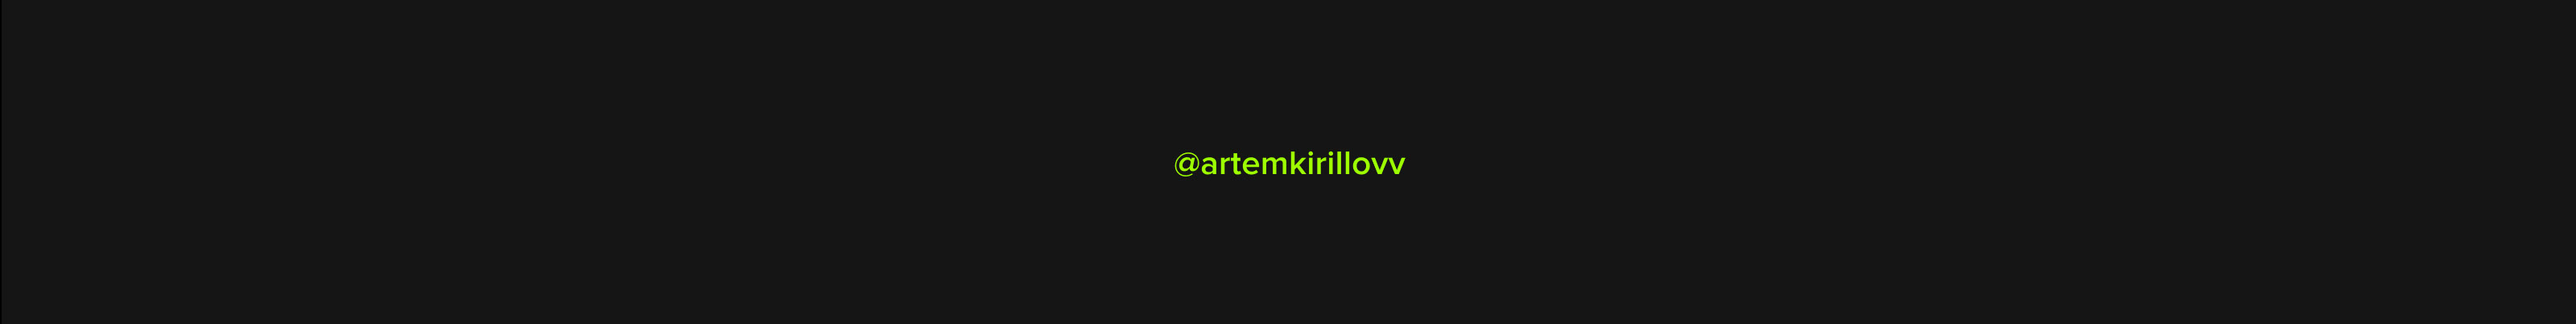 Artem Kirillov's profile banner